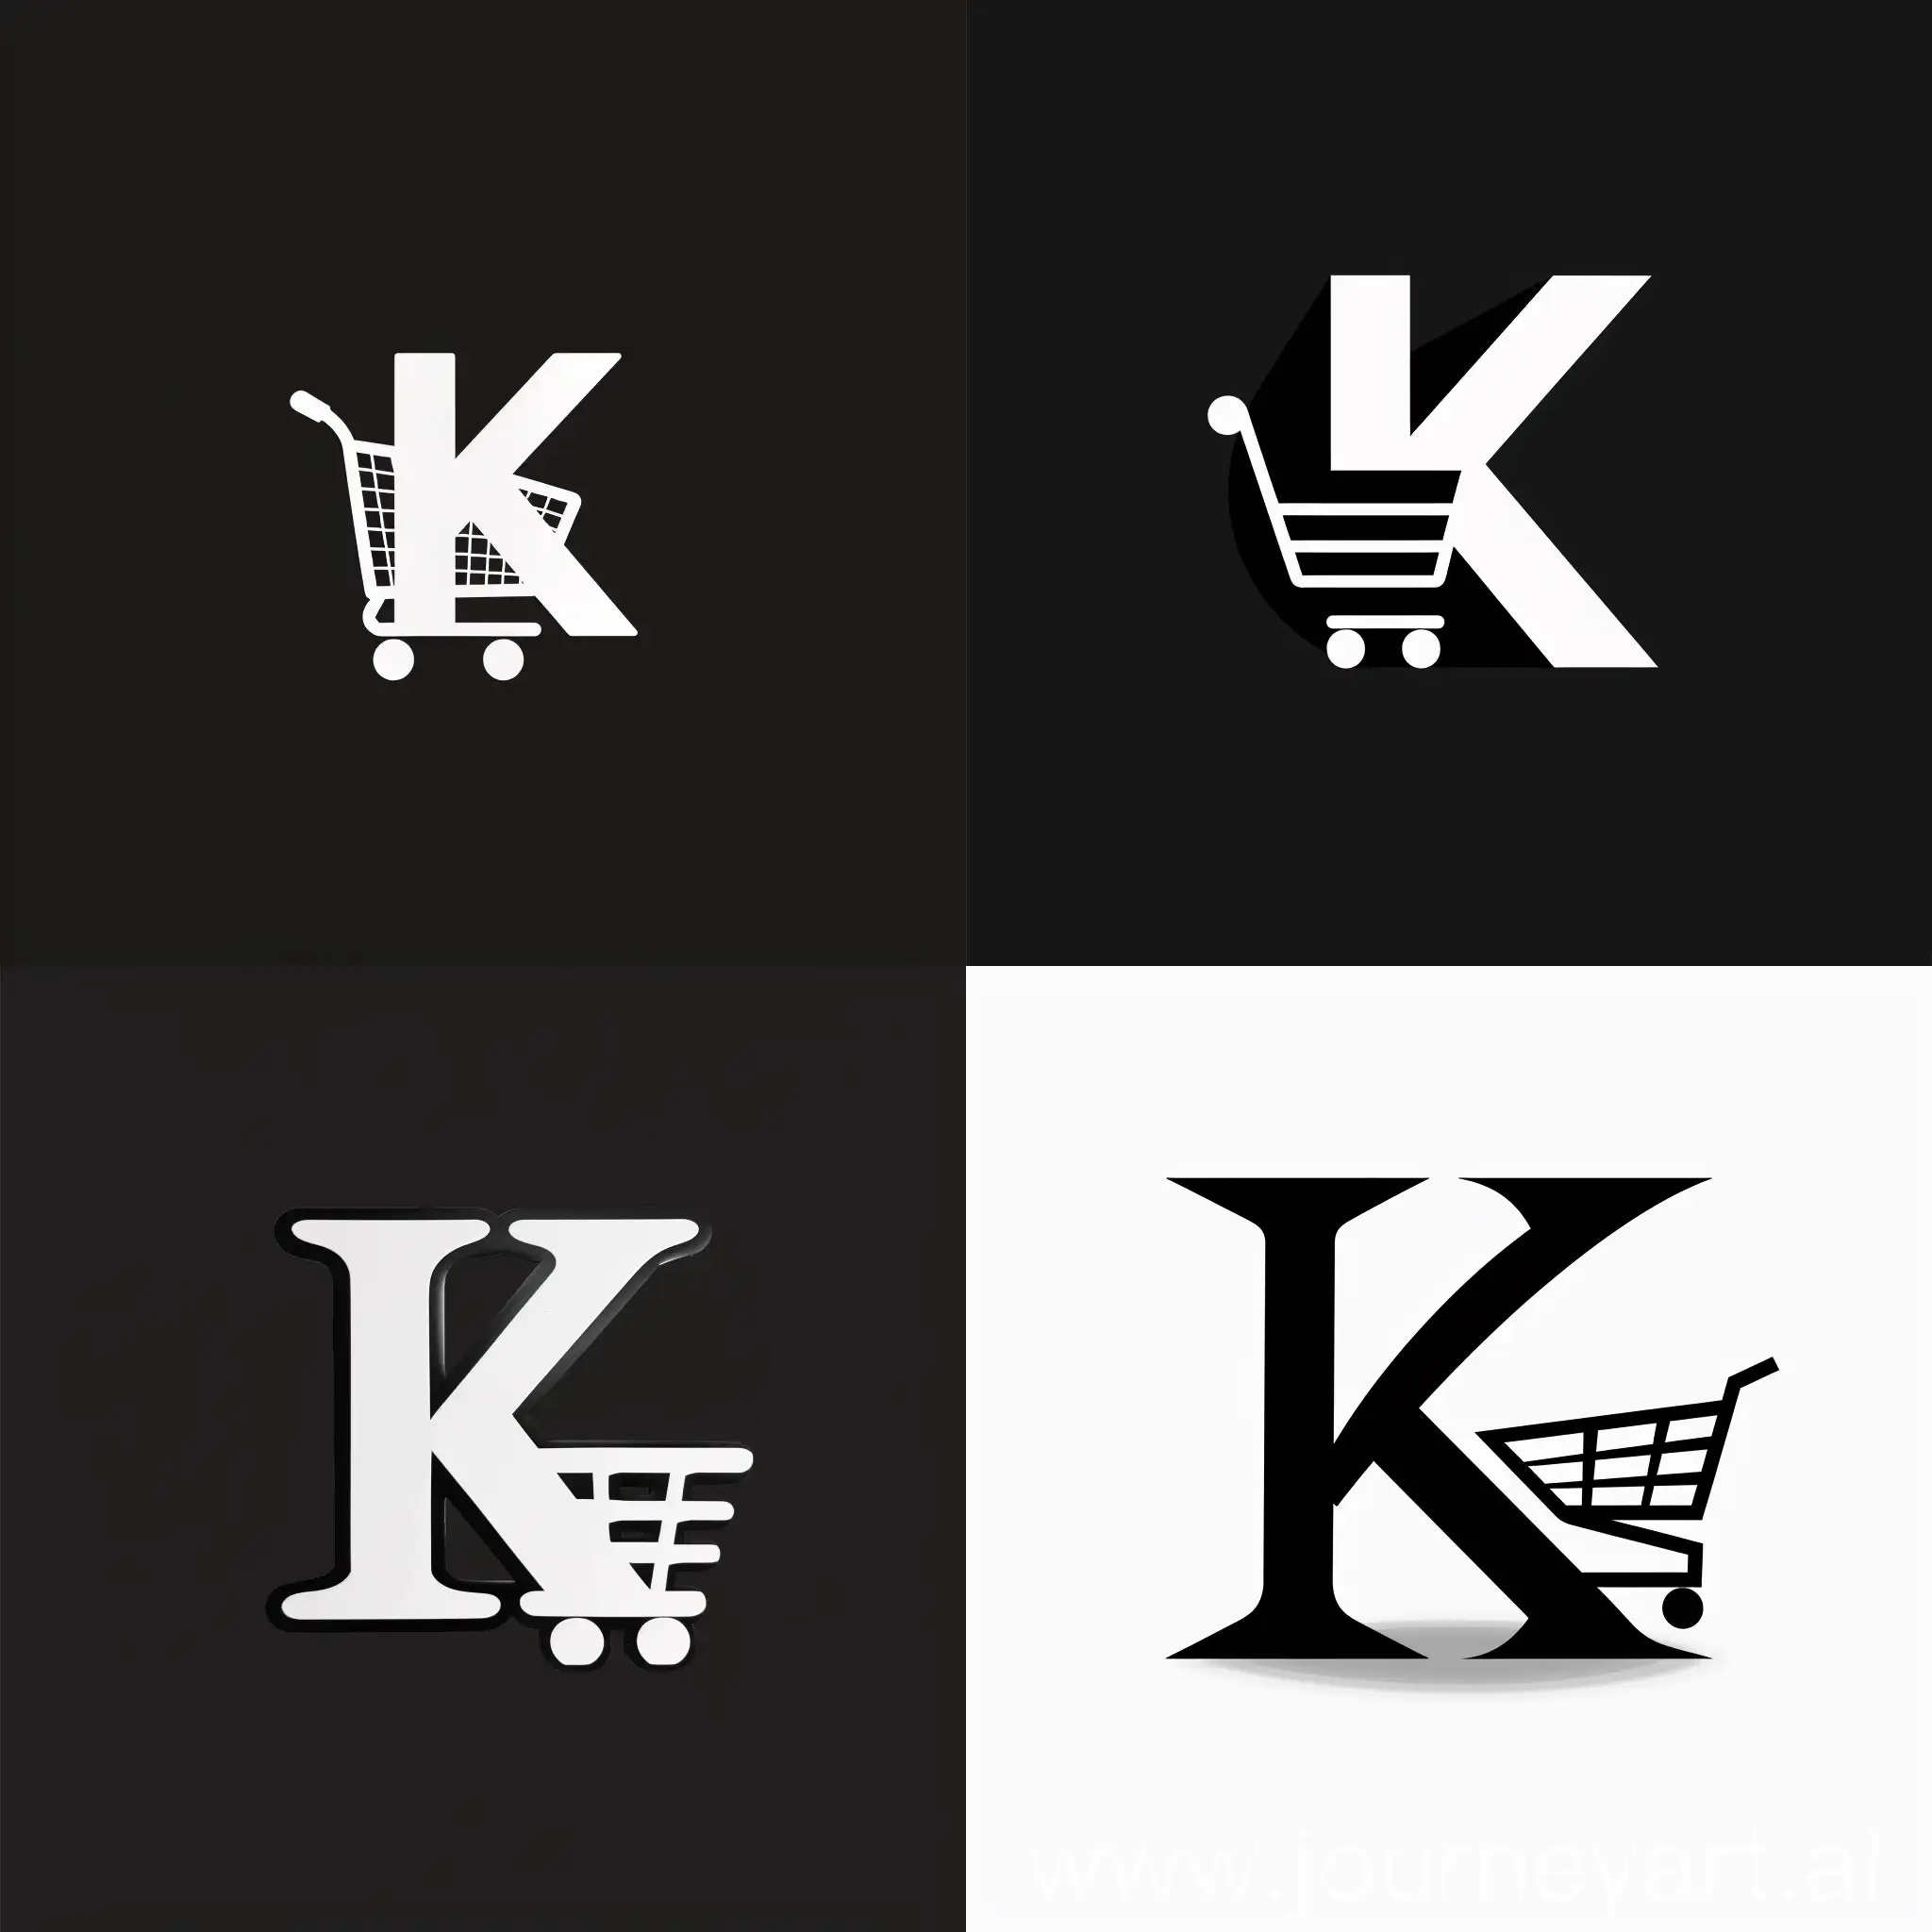 Monochrome-Letter-K-Logo-with-Shopping-Cart